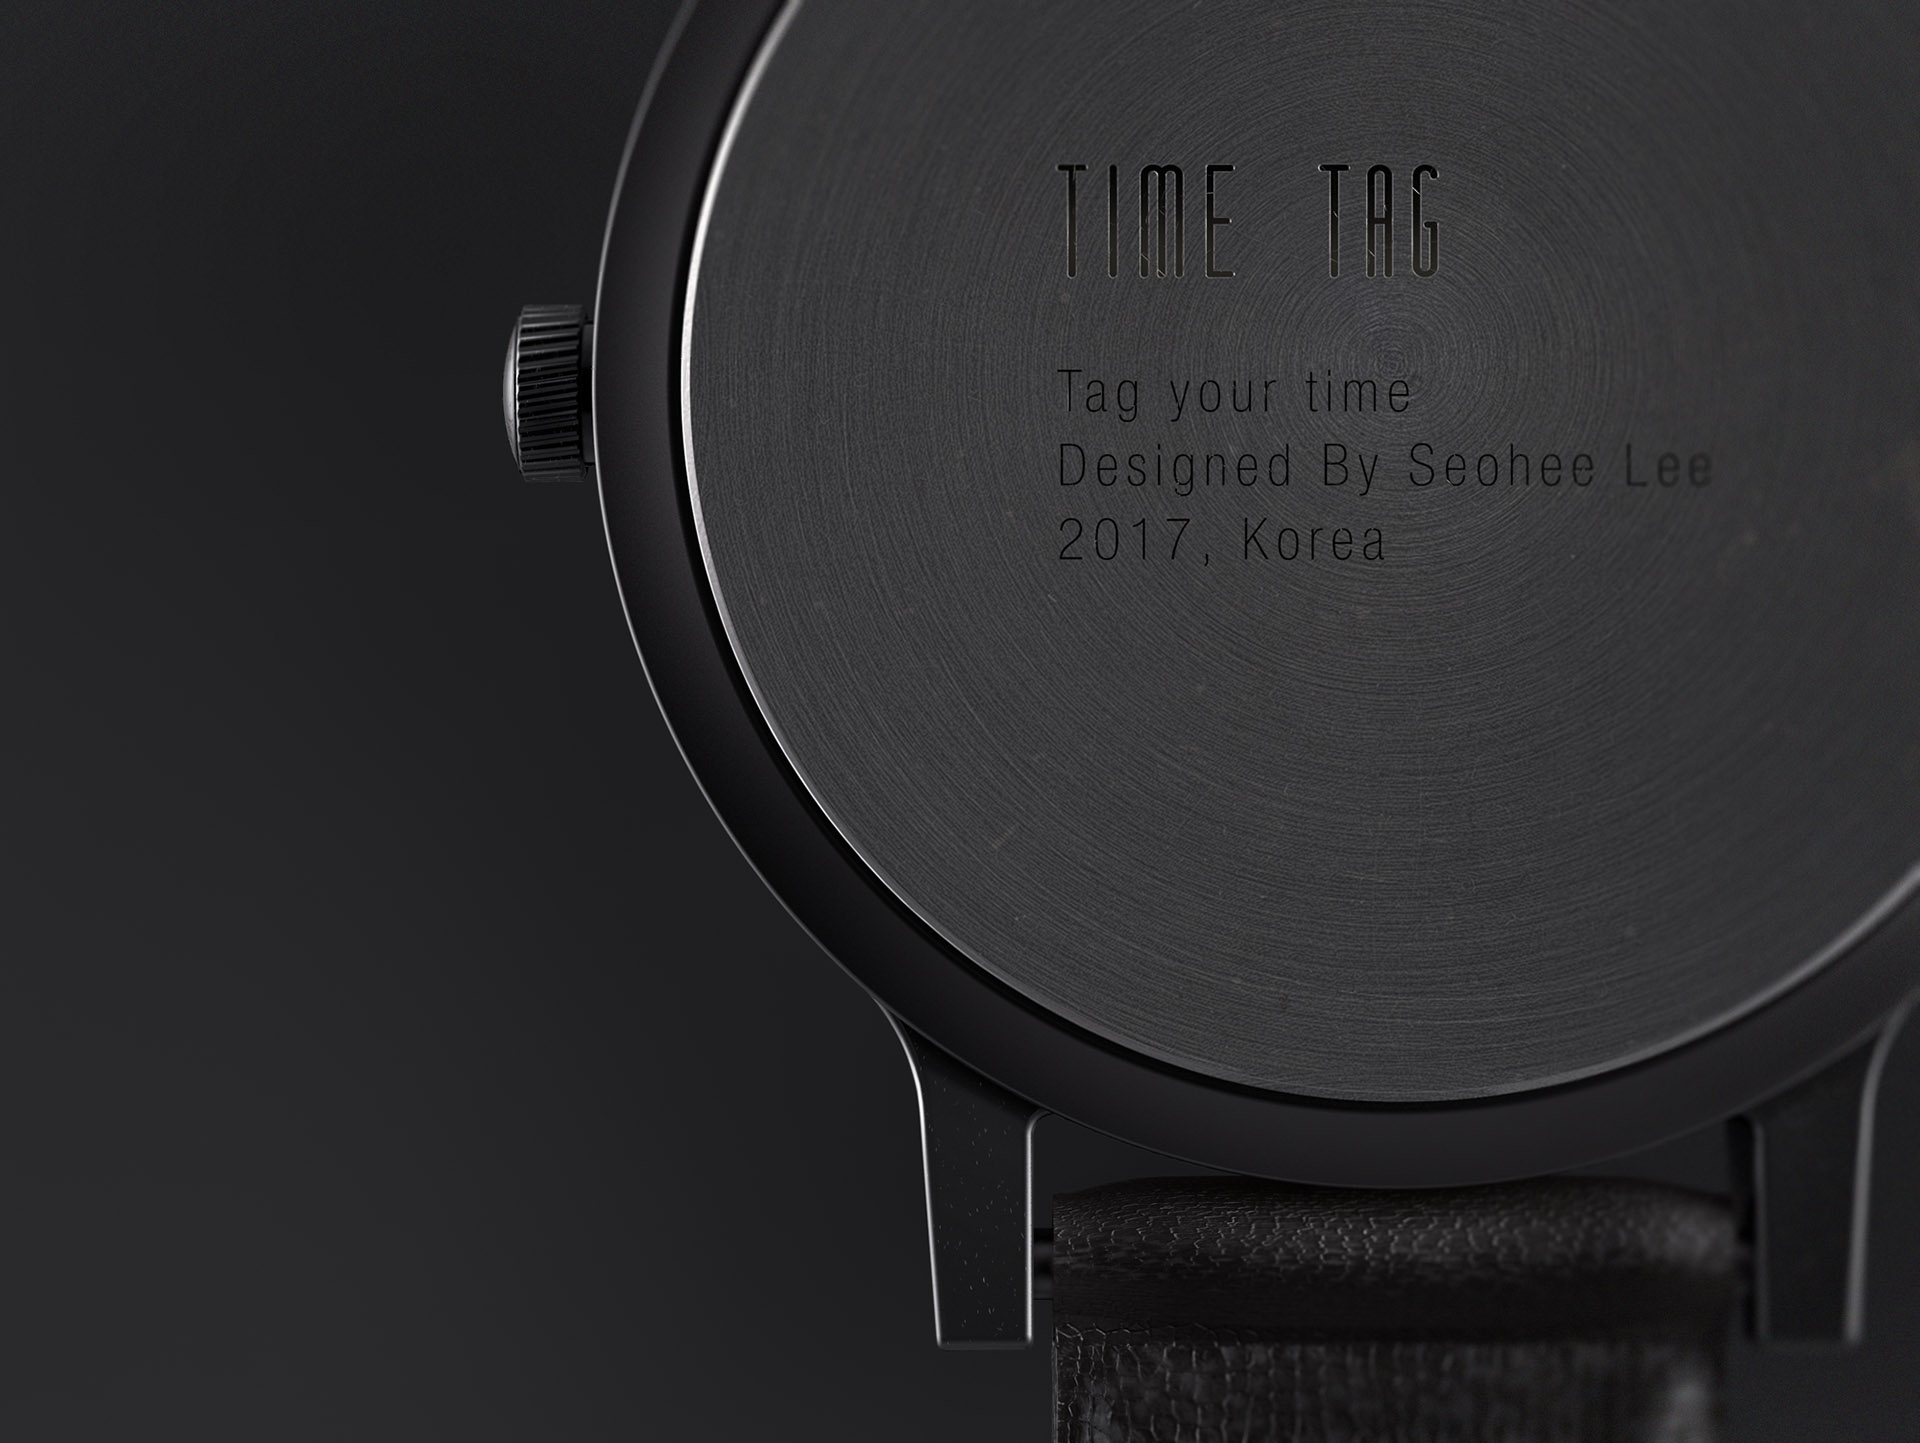 Time Tag Watch laser engravings